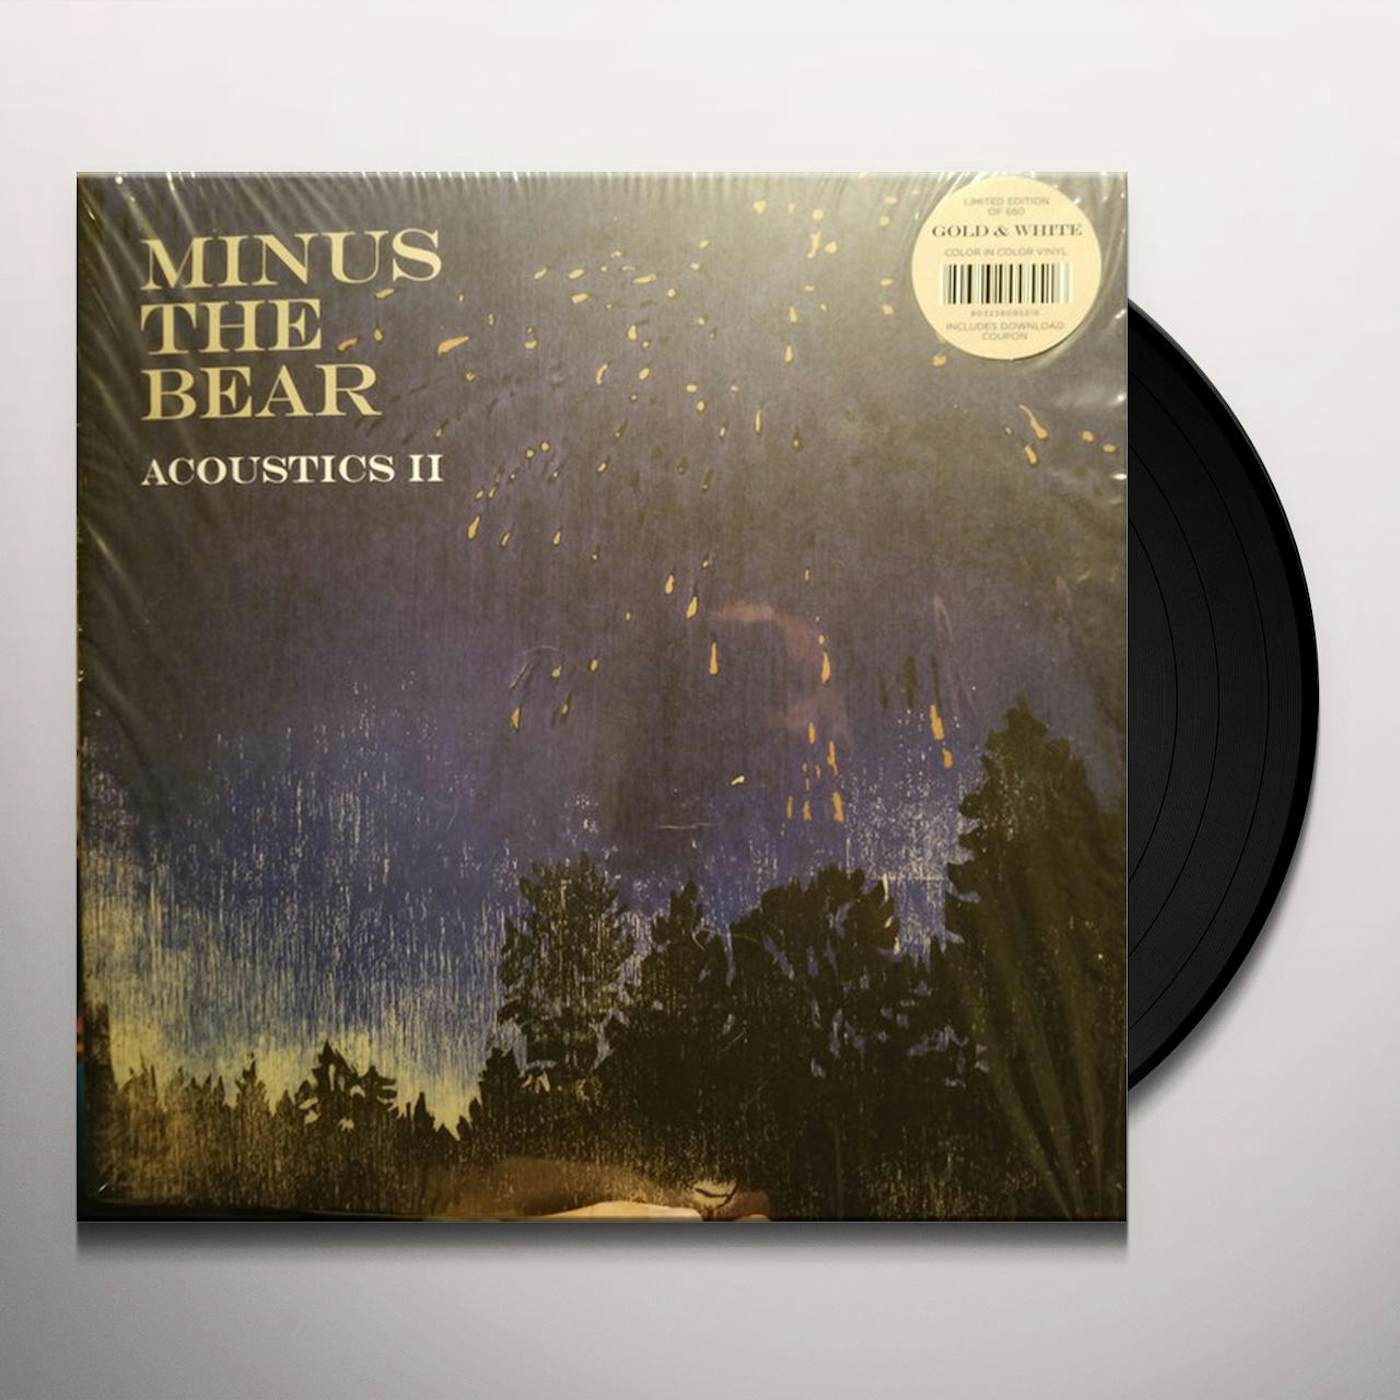 Minus the Bear ACOUSTICS 2 (GOLD & WHITE VINYL) Vinyl Record